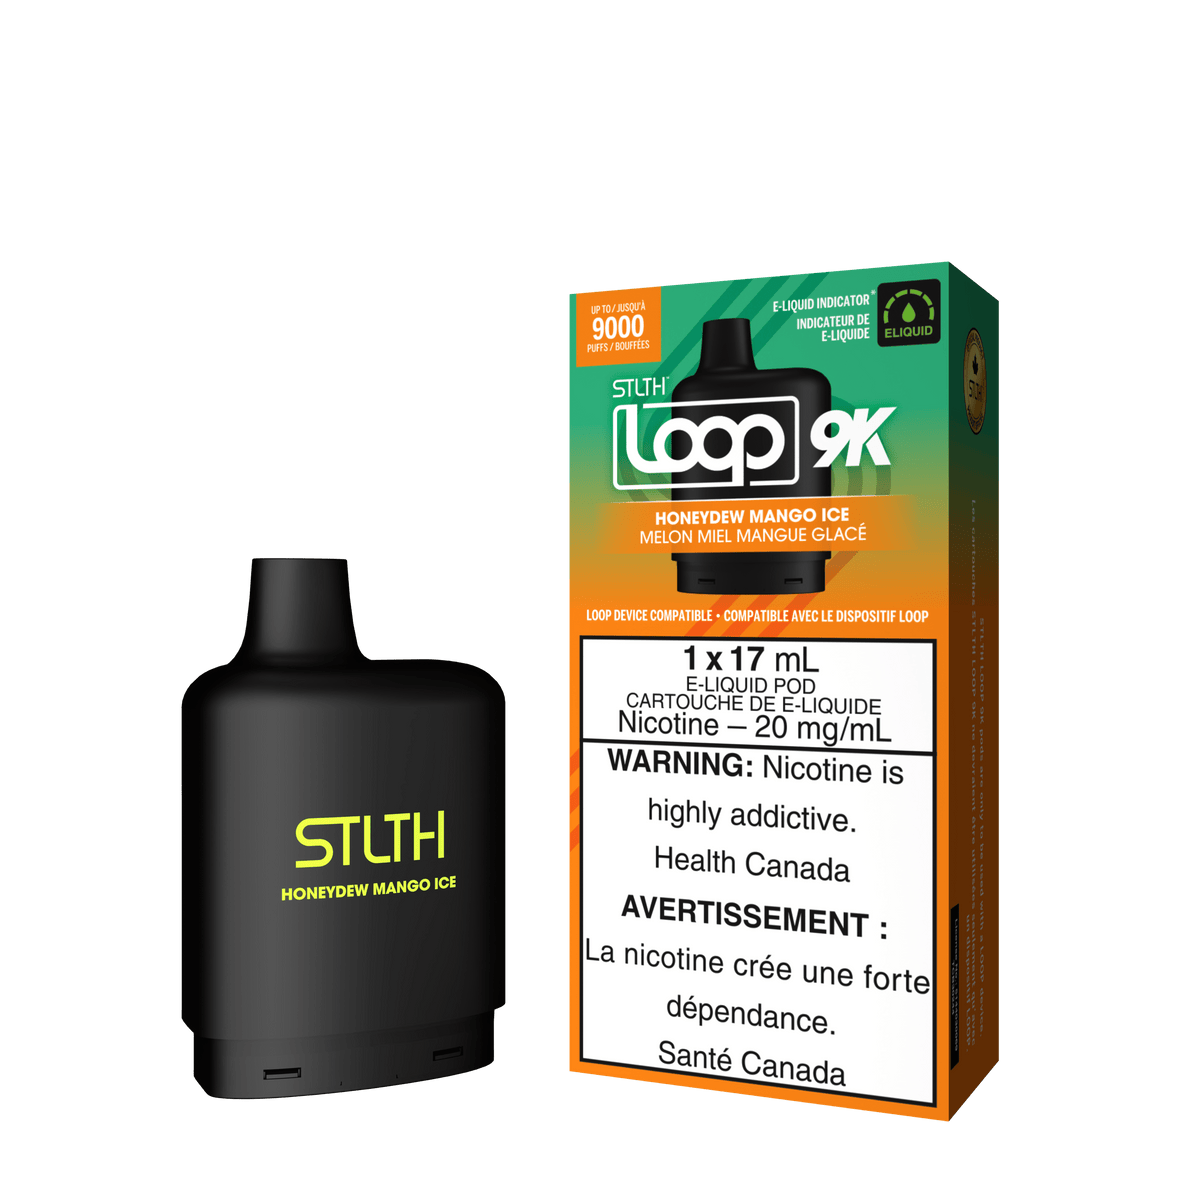 STLTH Loop 9K Pod - Honeydew Mango Ice available on Canada online vape shop